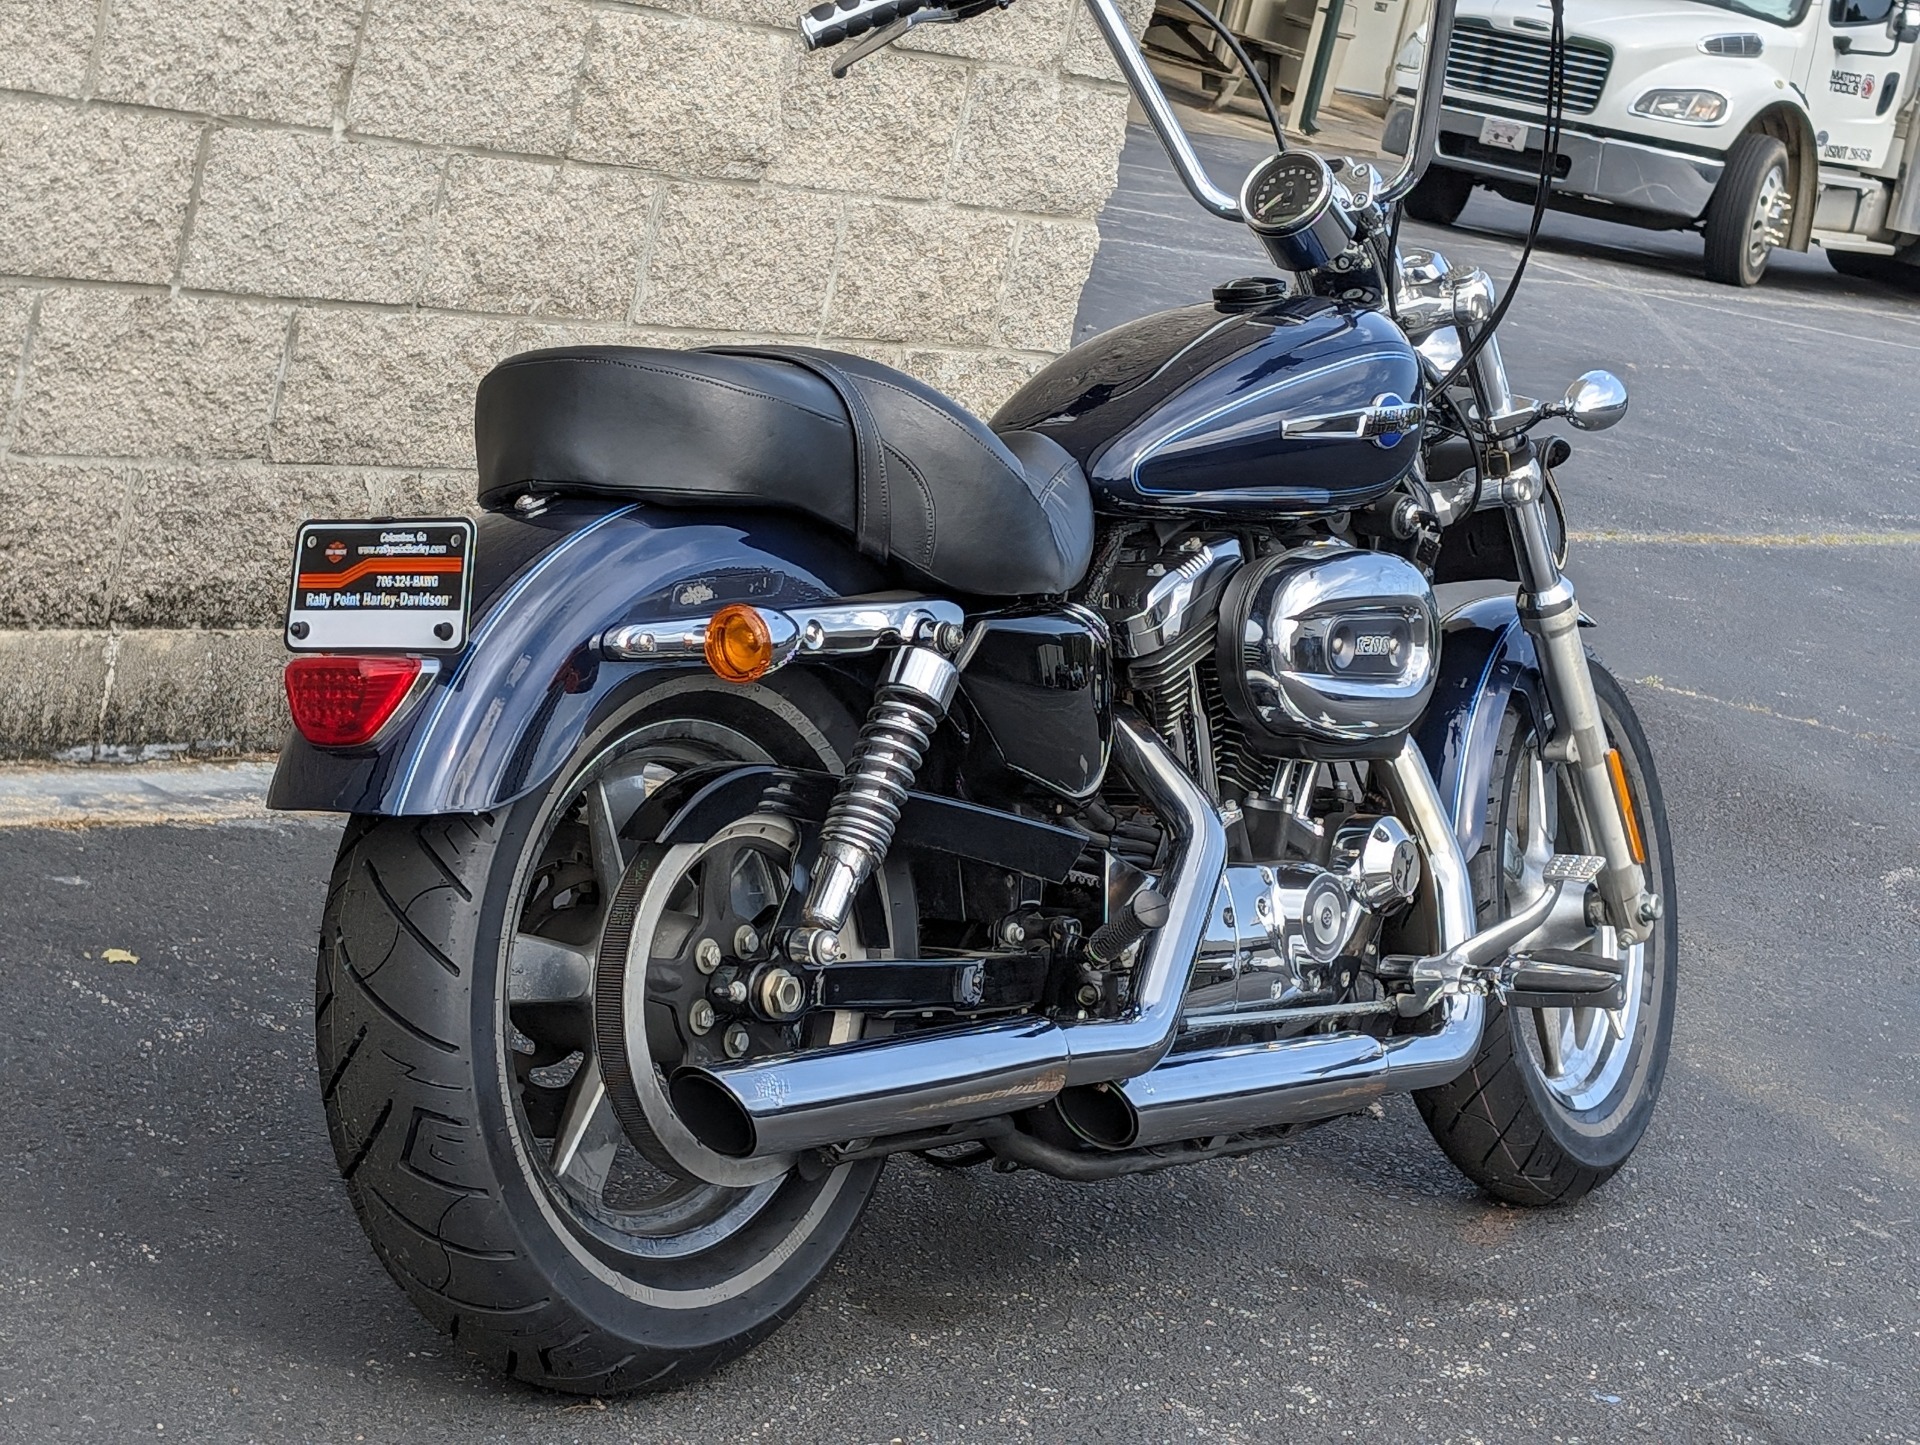 2014 Harley-Davidson 1200 Custom in Columbus, Georgia - Photo 9